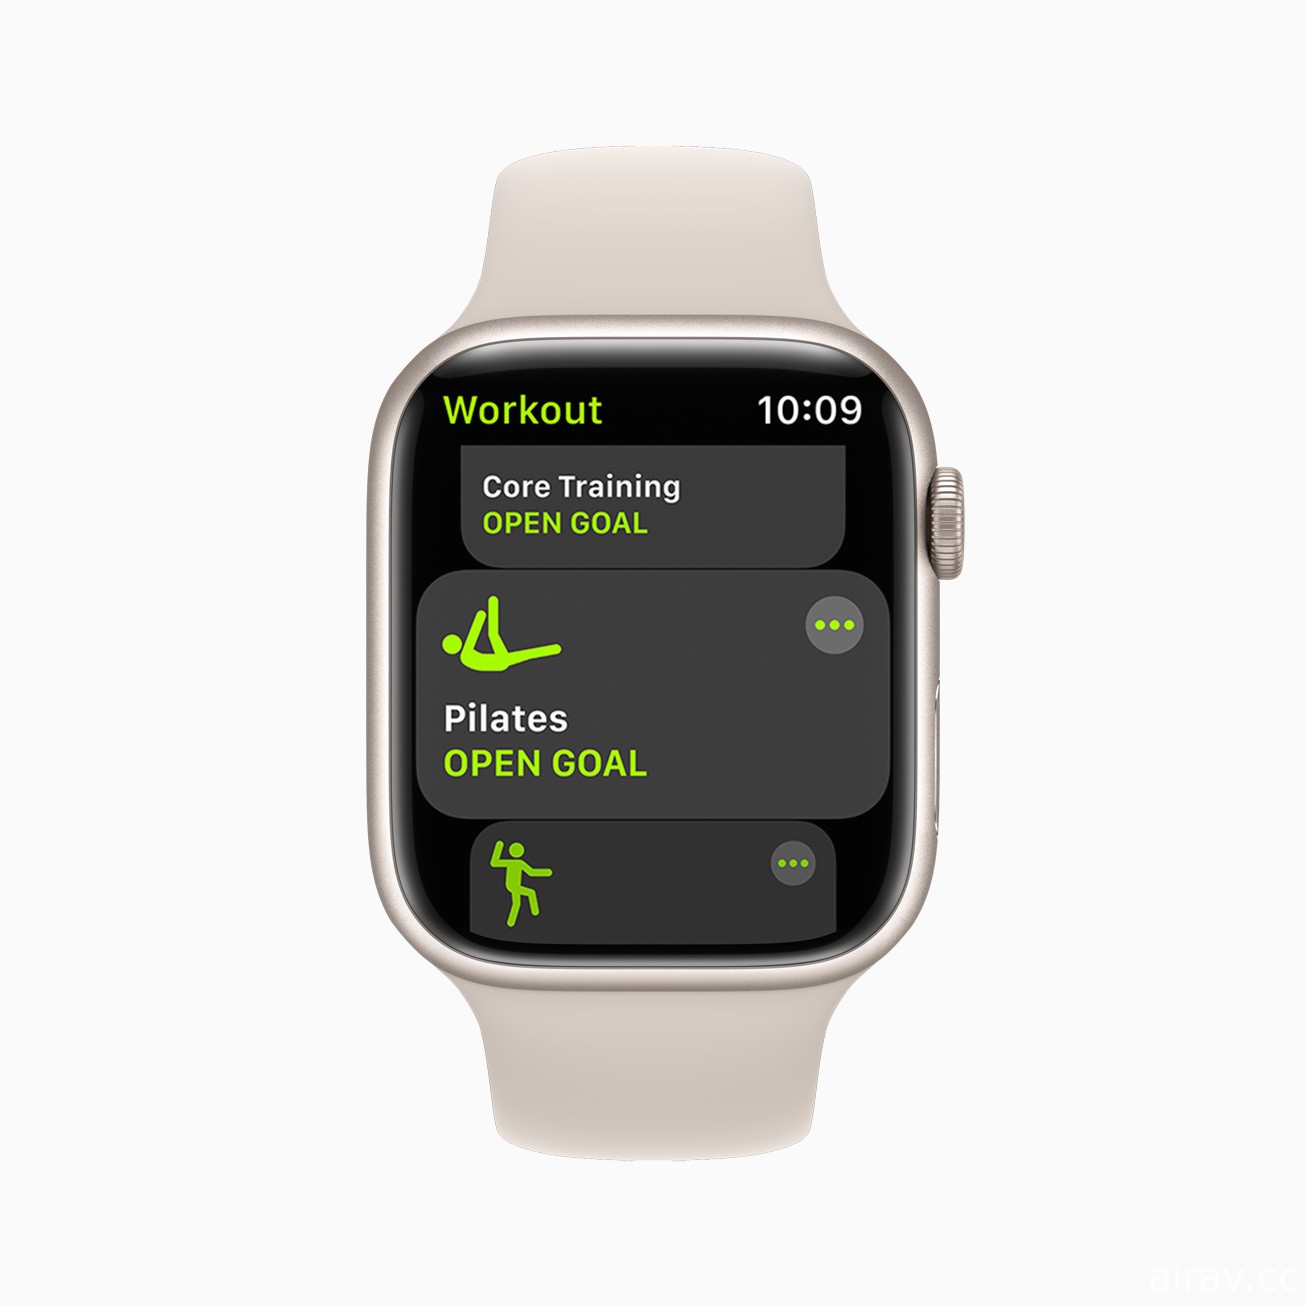 Apple 公佈 Apple Watch Series 7 配備最大、最先進的顯示器及 watchOS 8